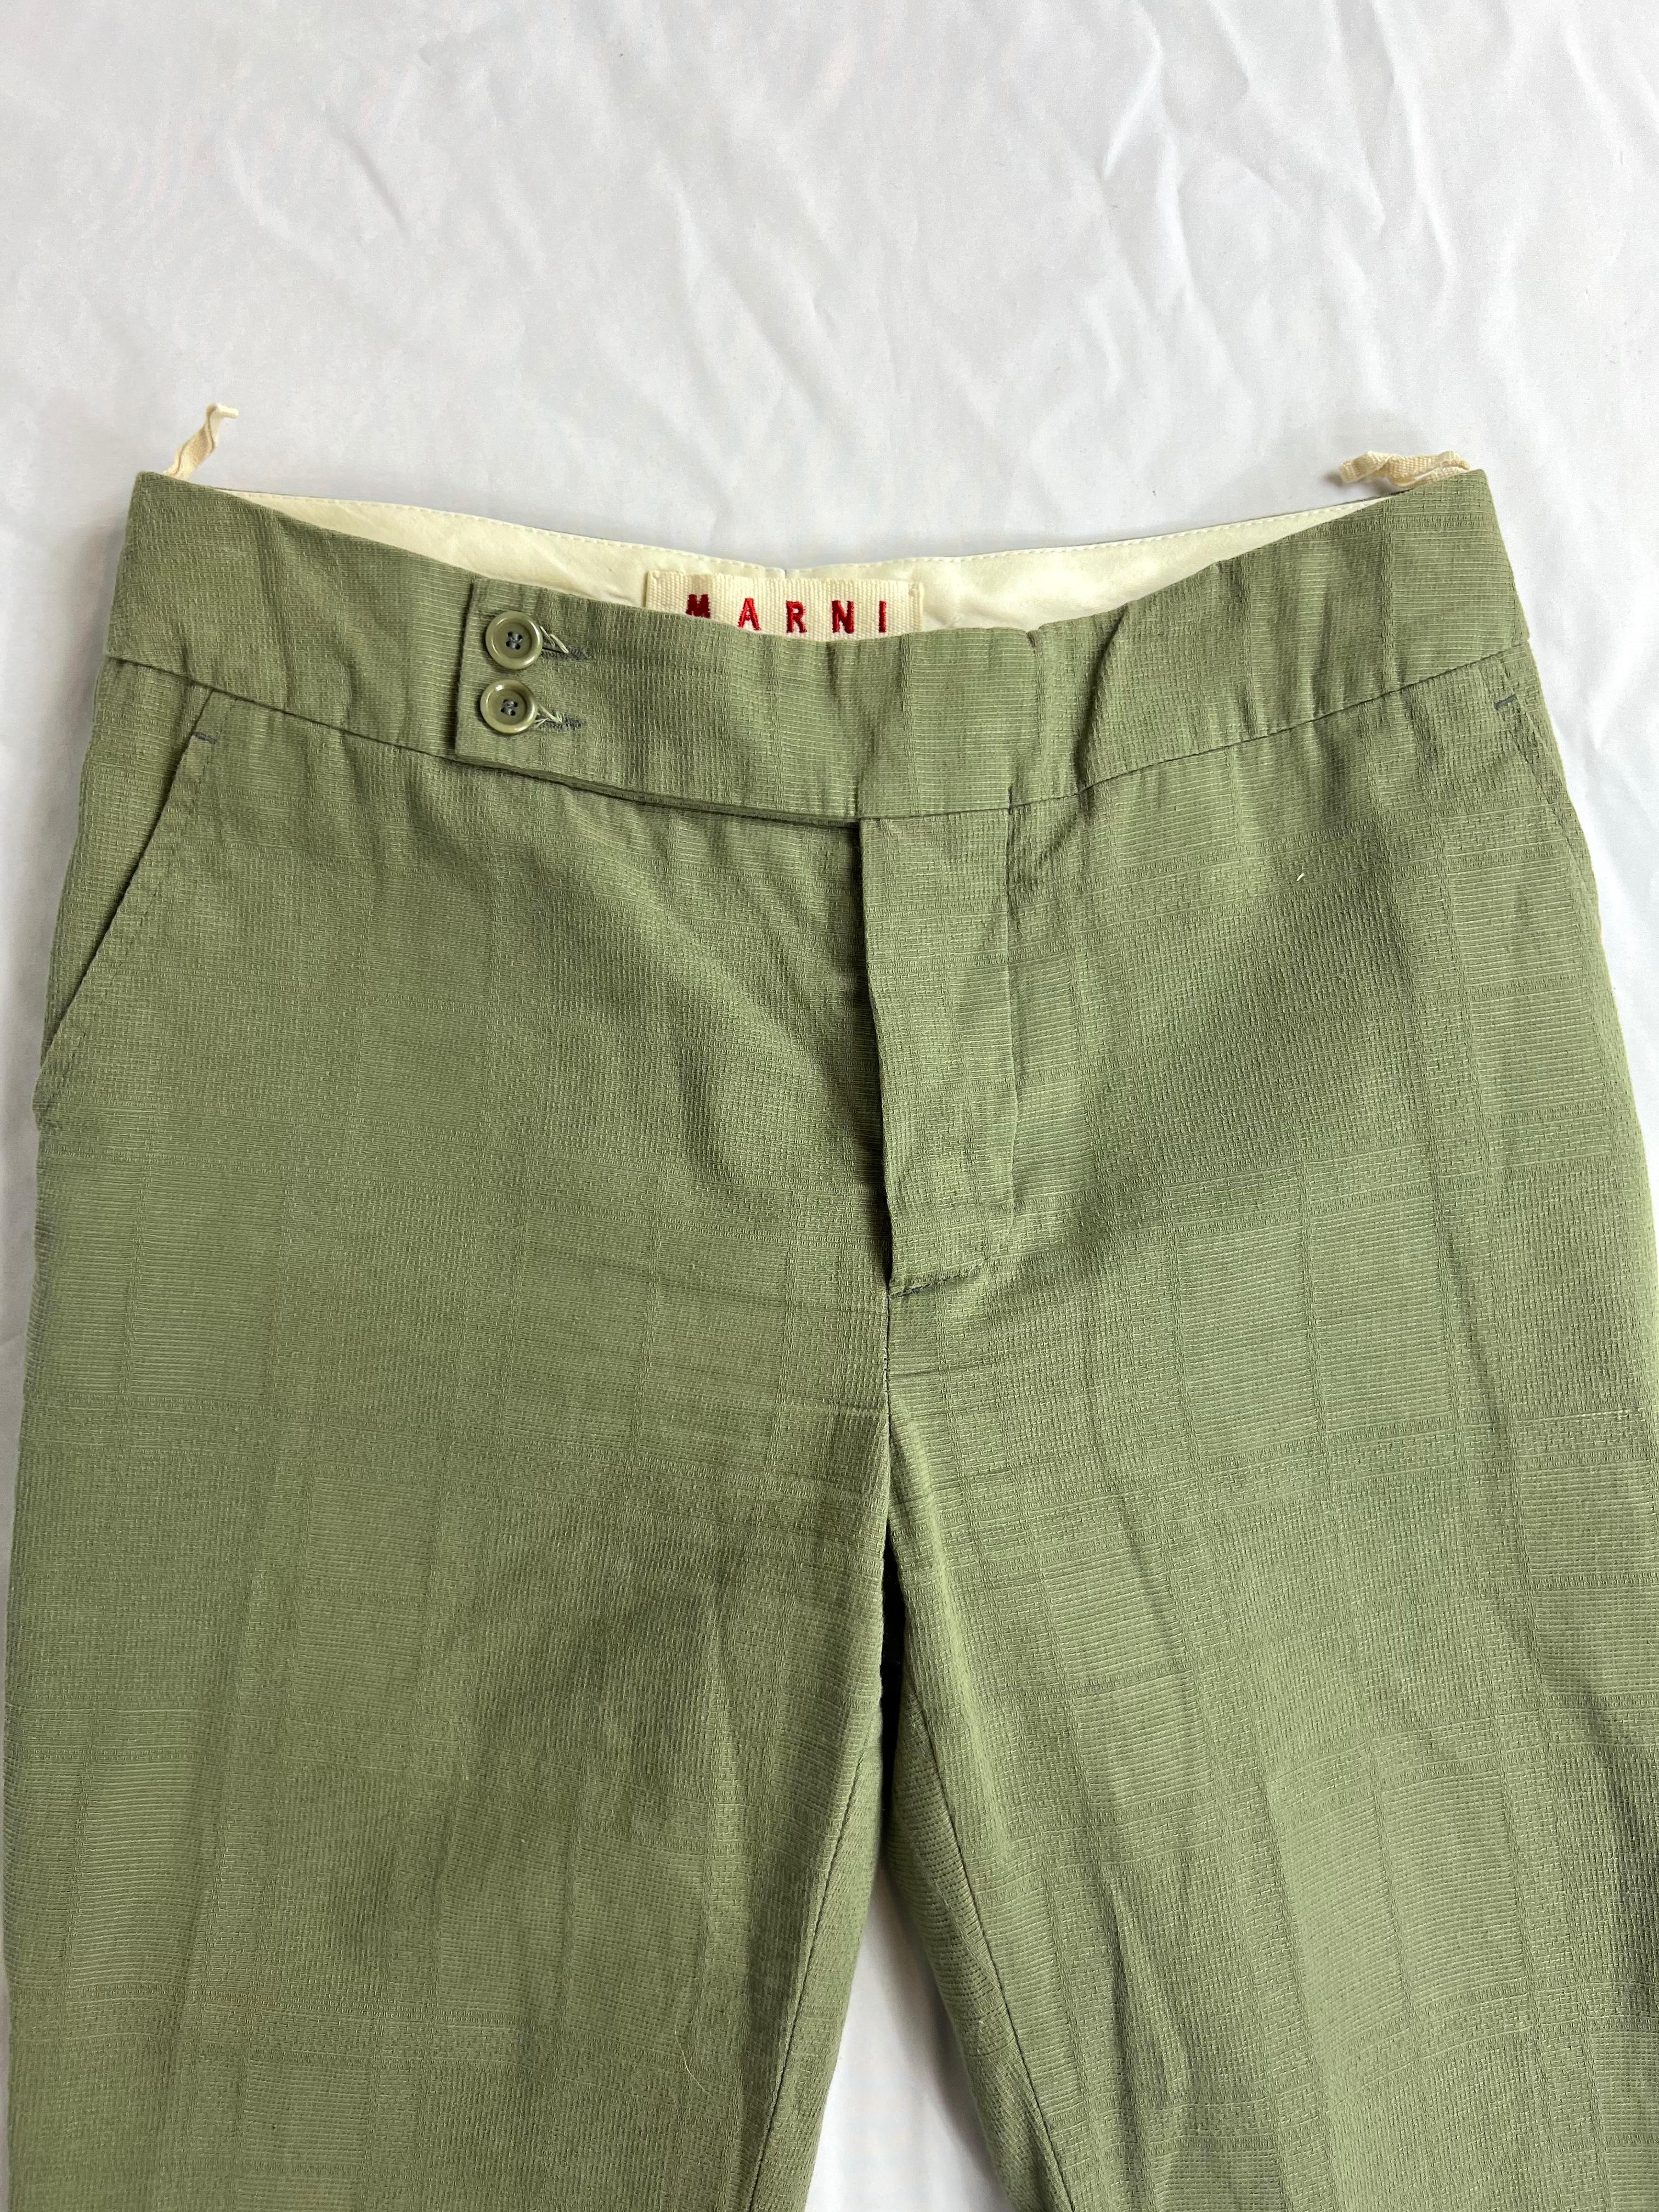 marni green pants